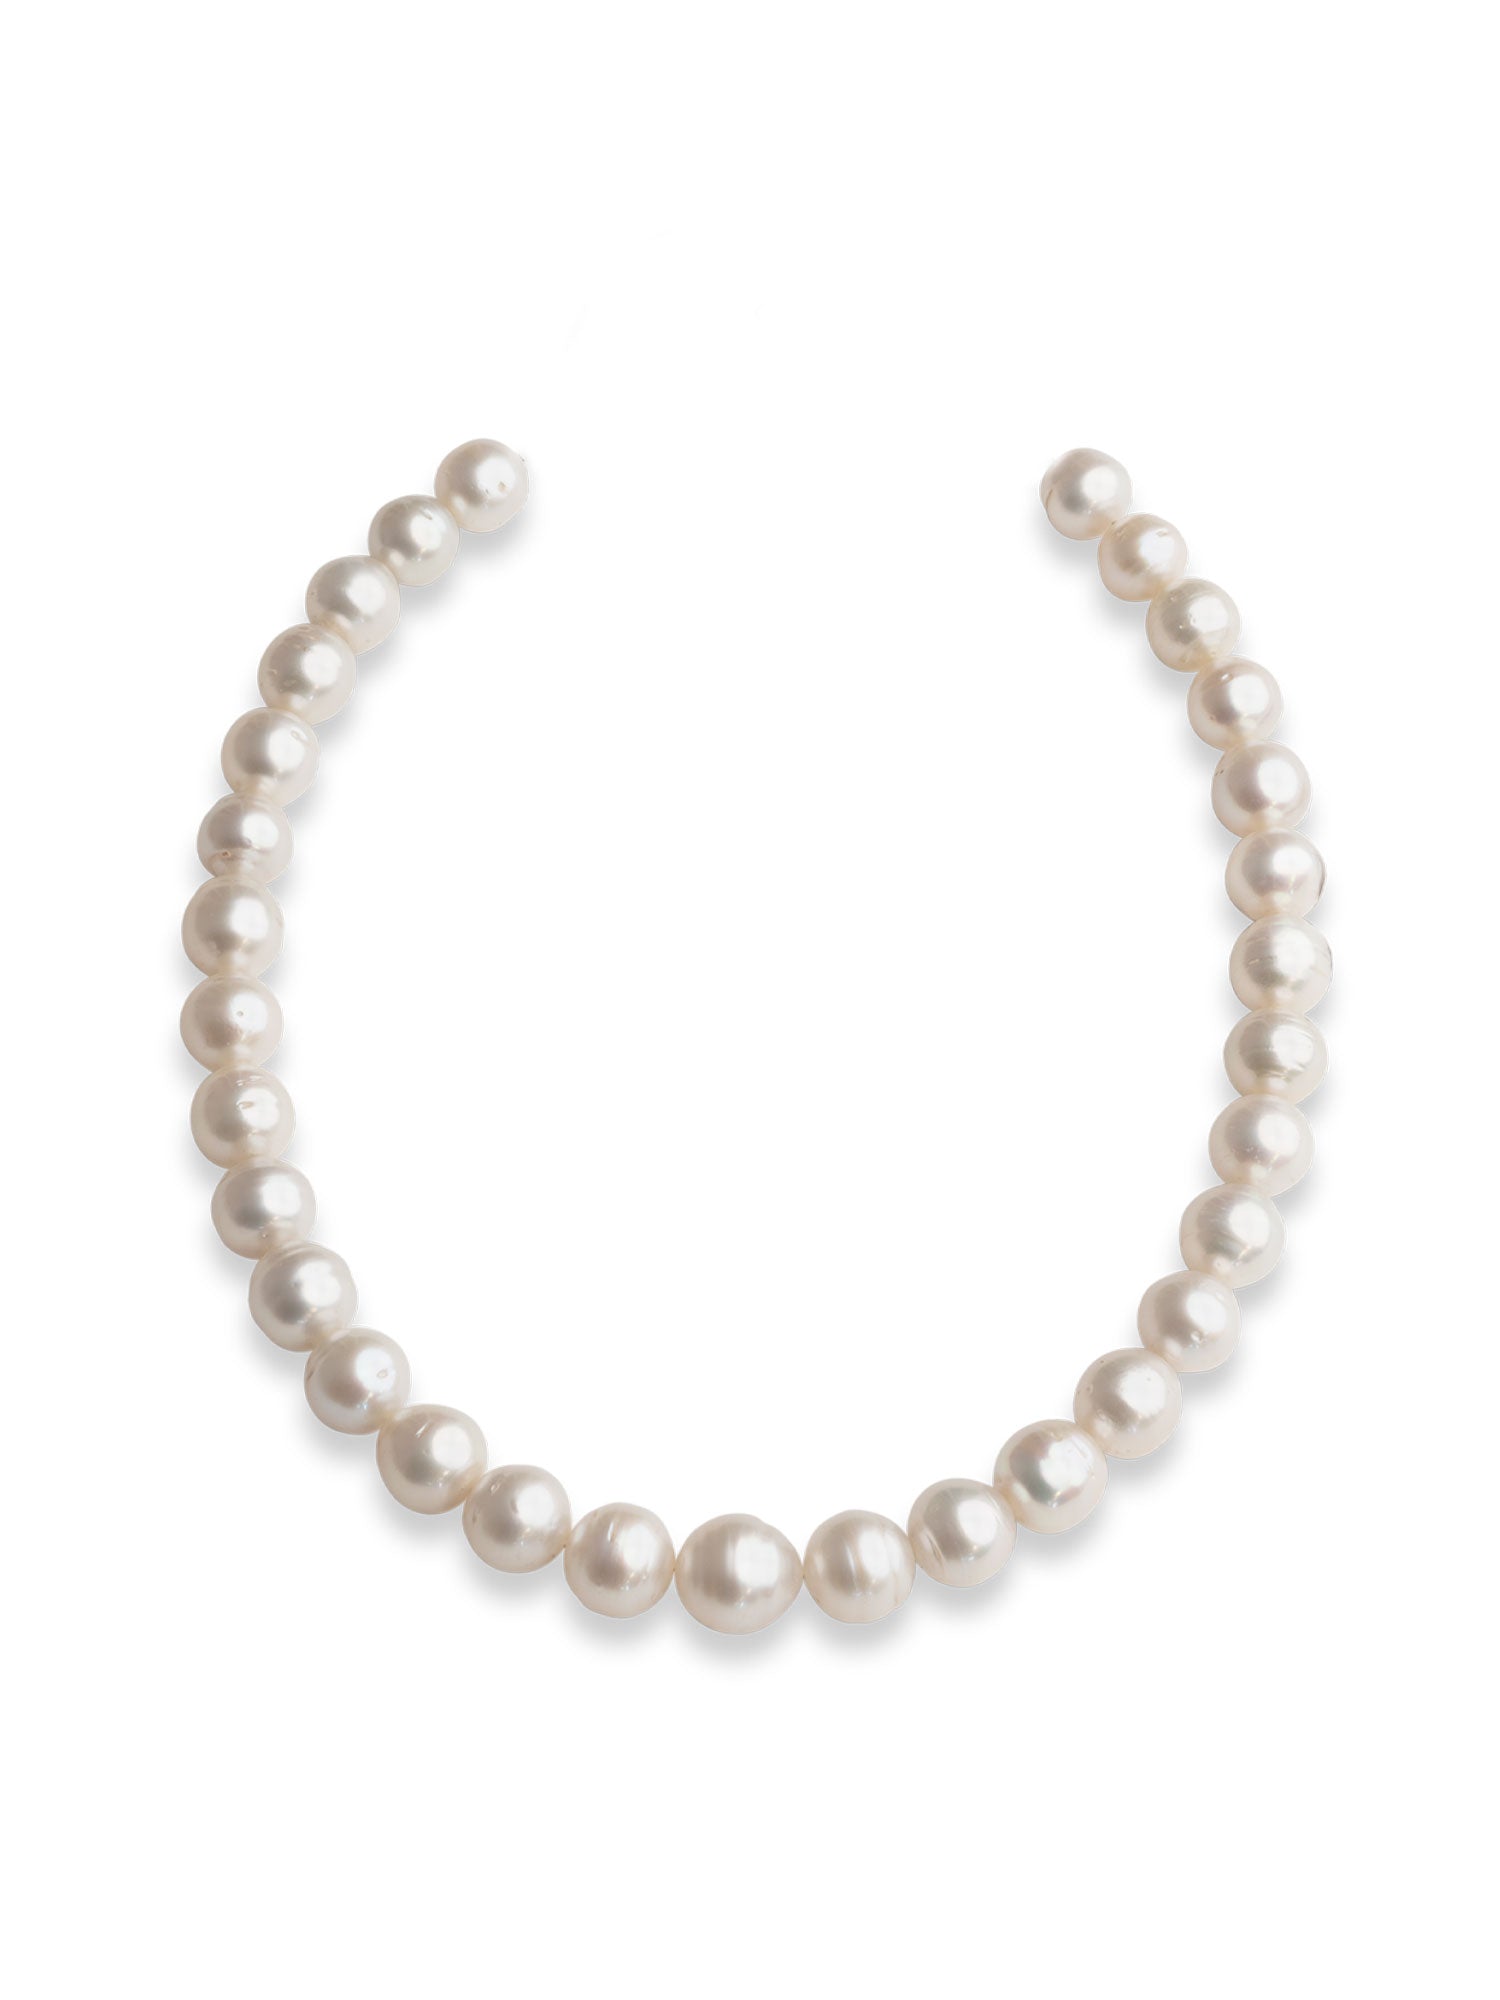 12 - 15mm AA+ Australian Cultured Pearl Necklace | 45cm